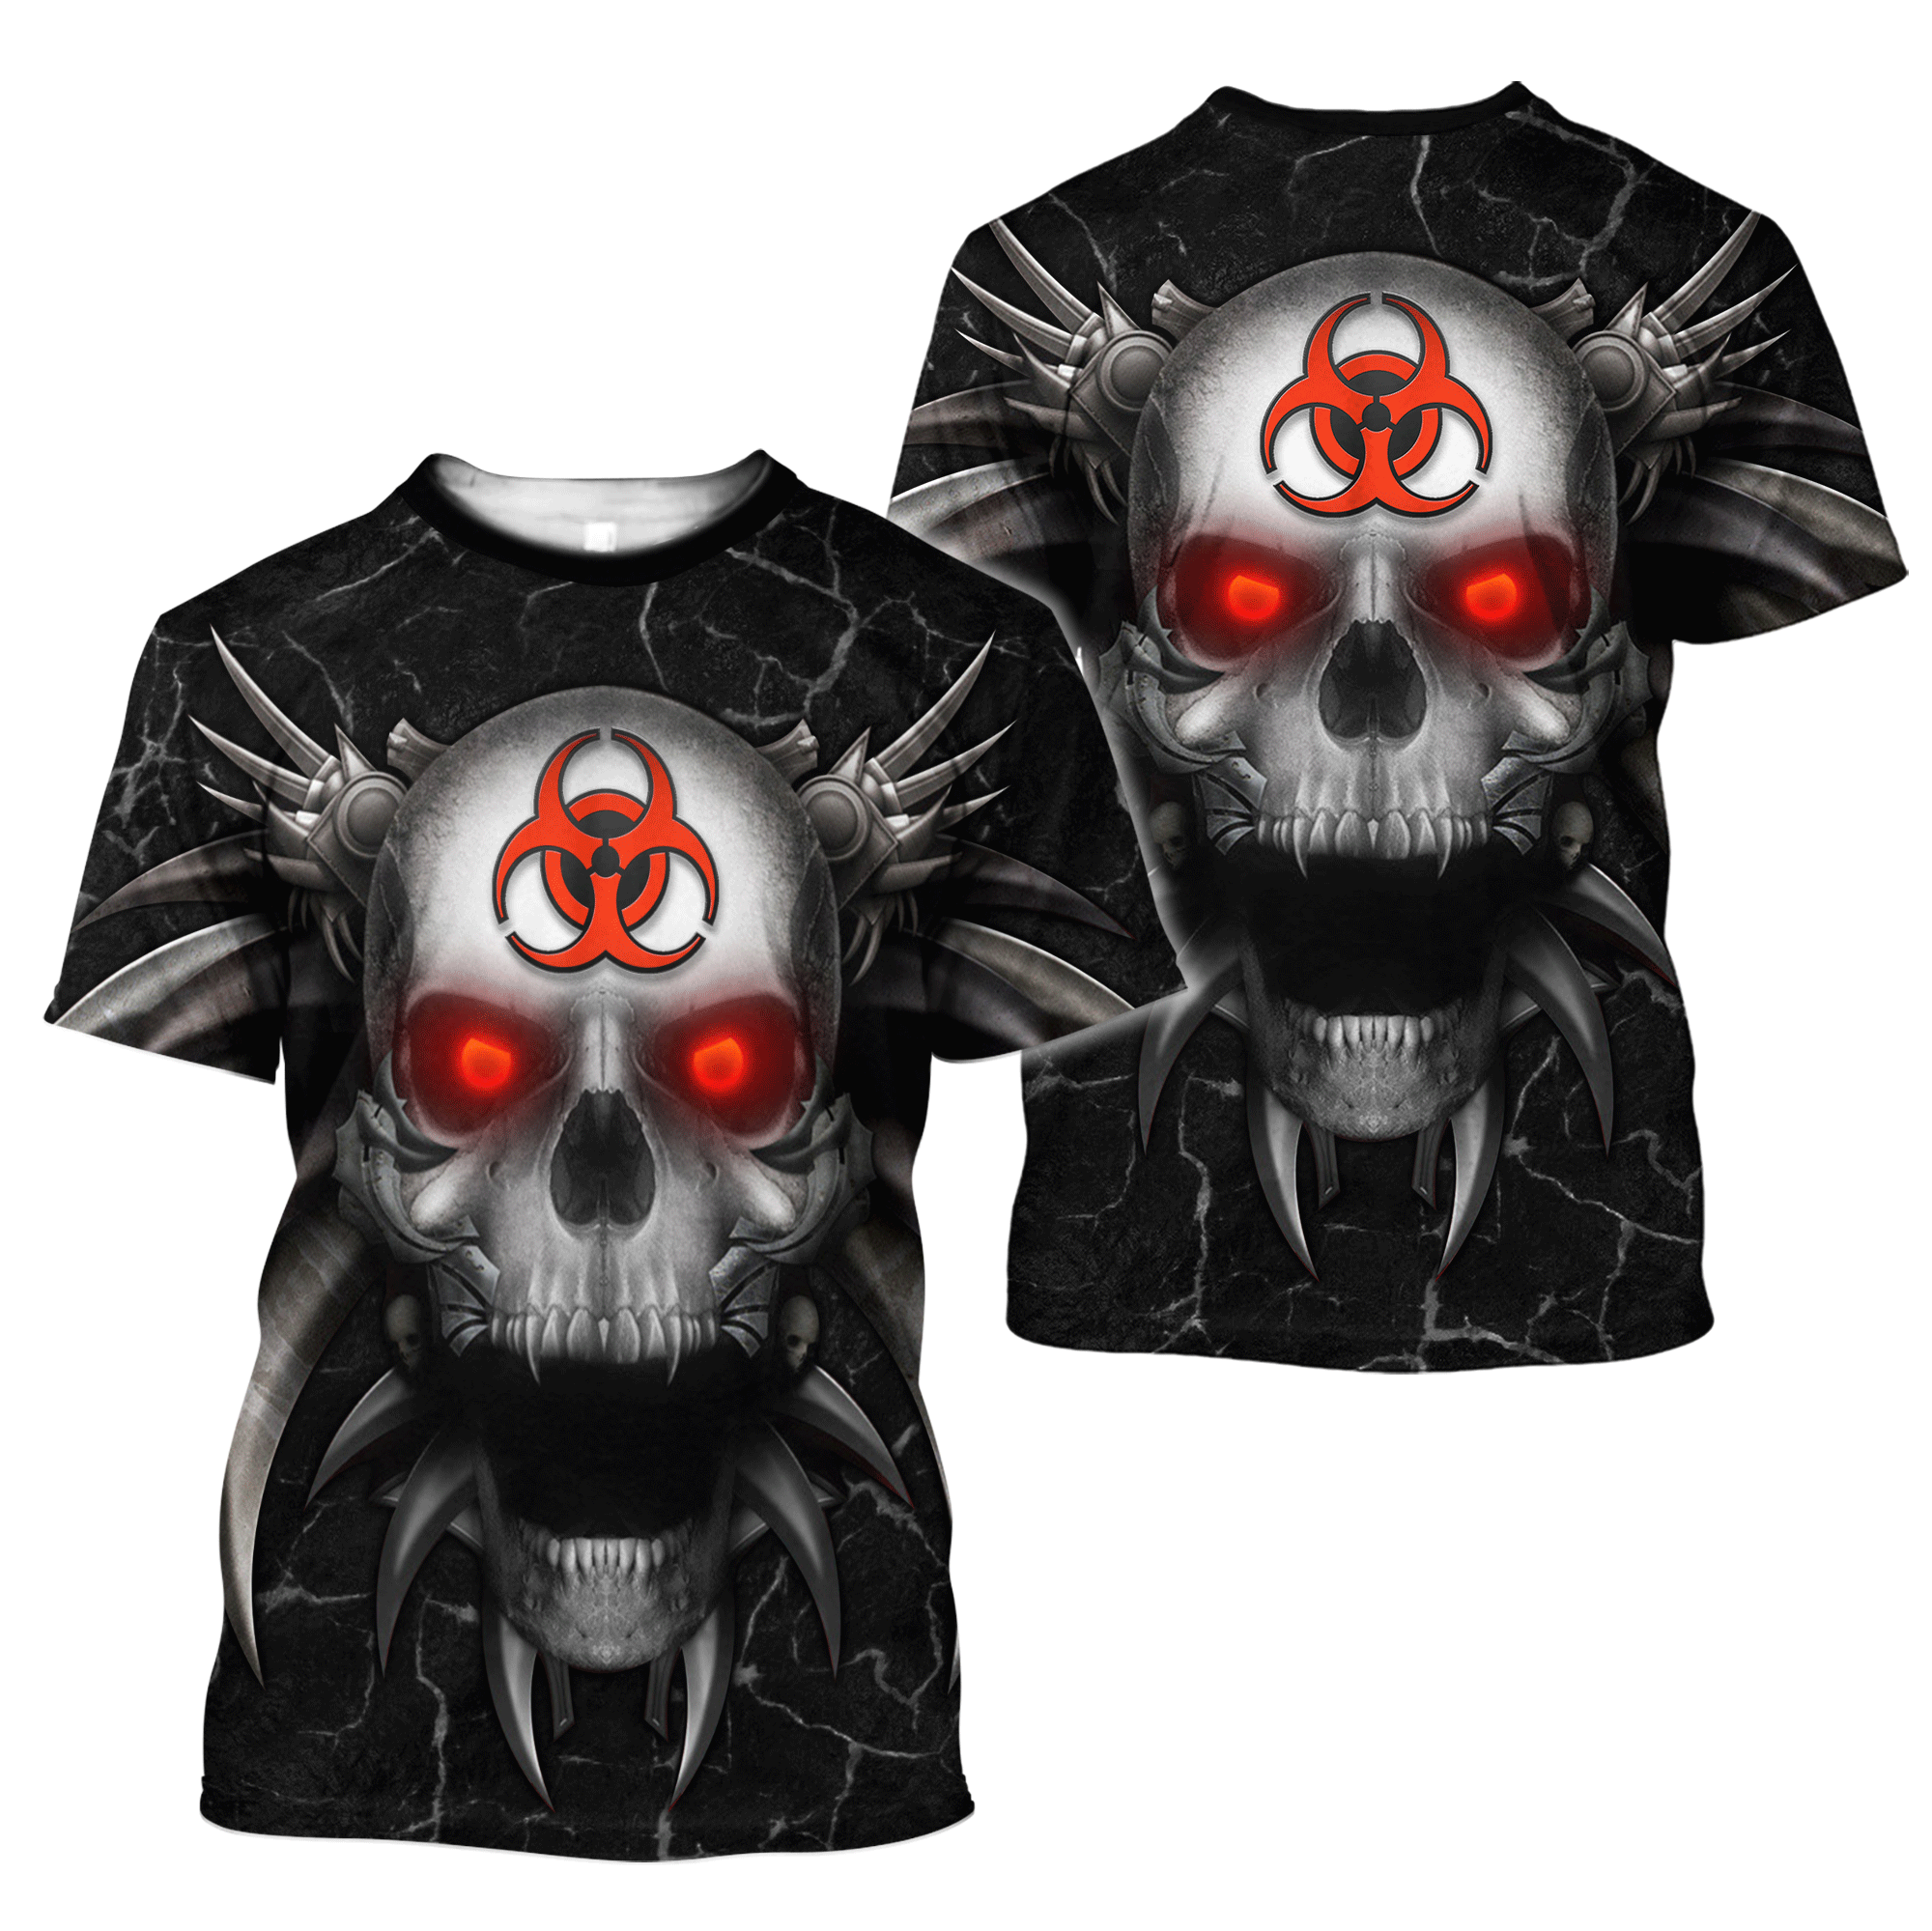 Metal Biohazard Skull Unisex T-shirt KL15112202